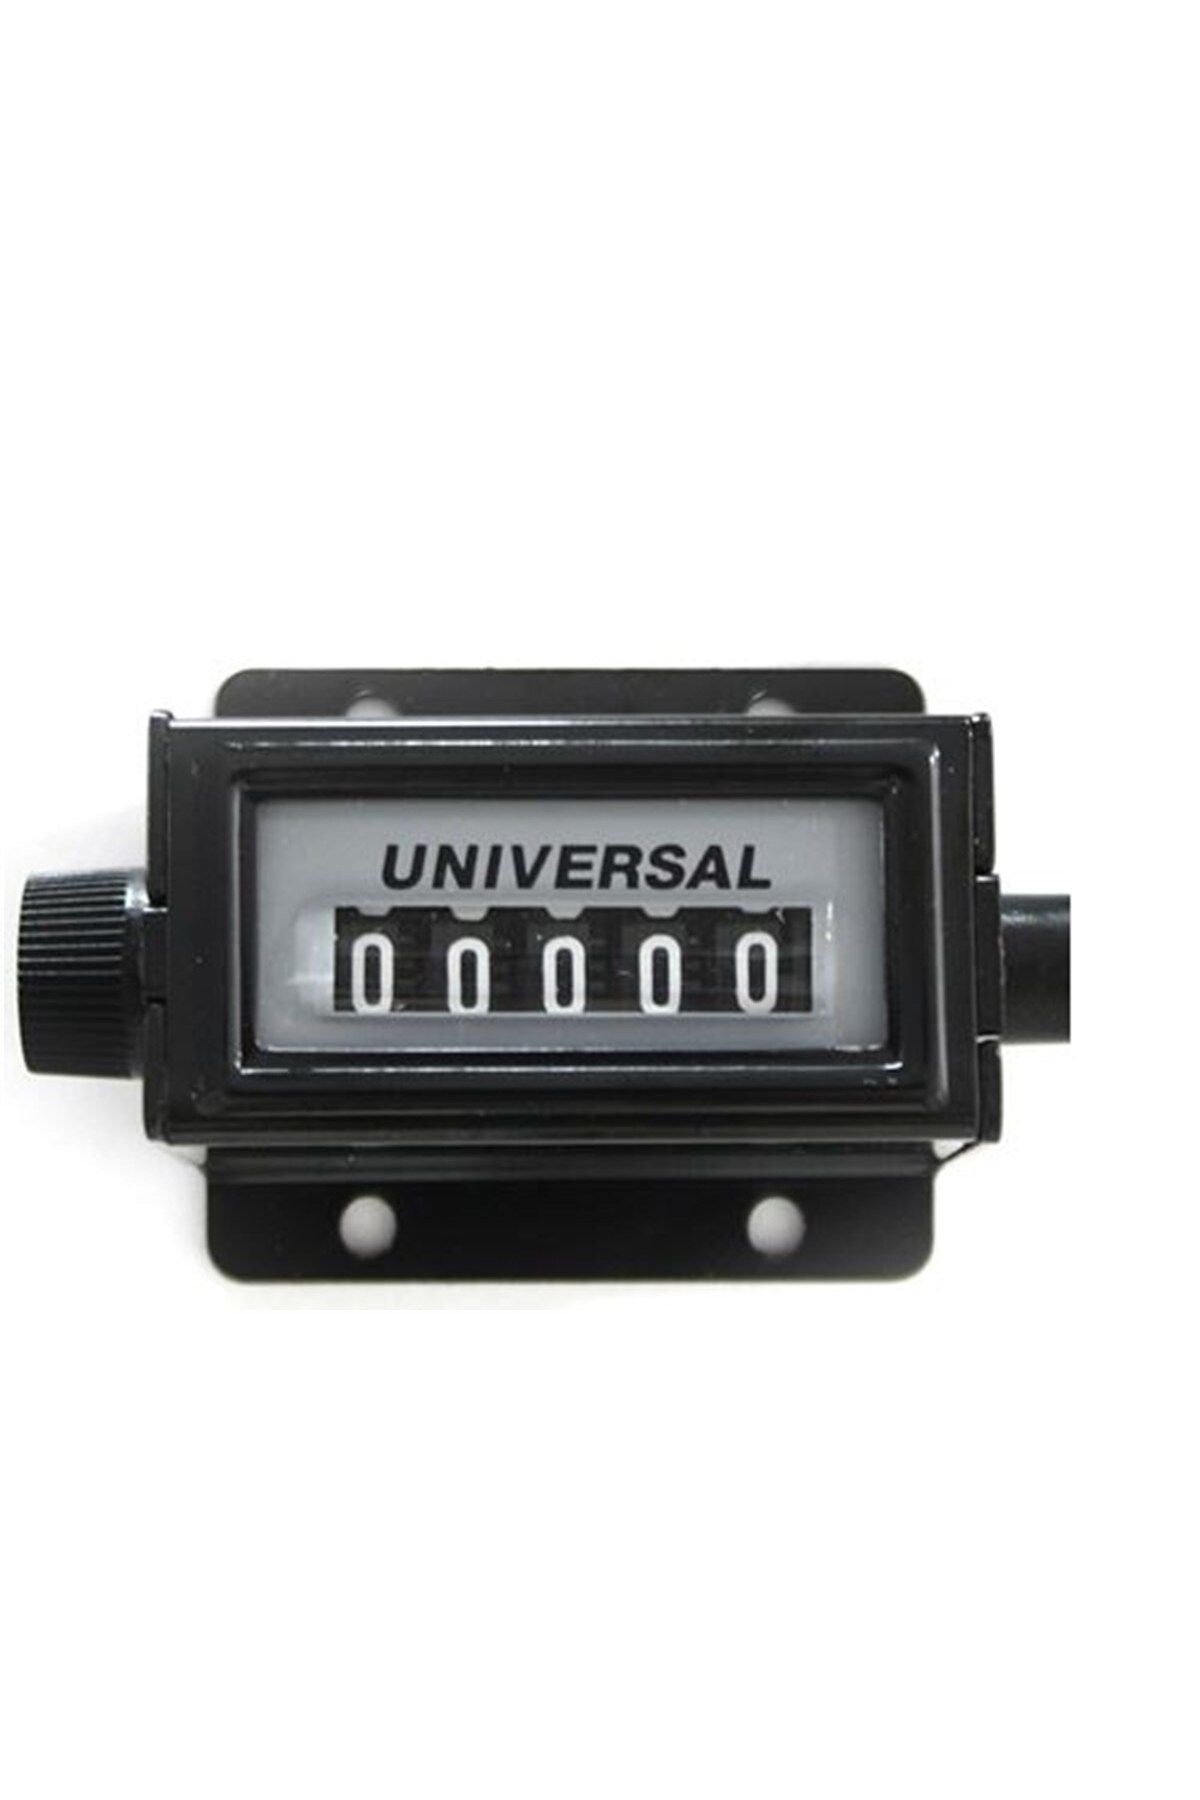 Universal Unıversal Lb-102-5 Dönmeli Turmetre